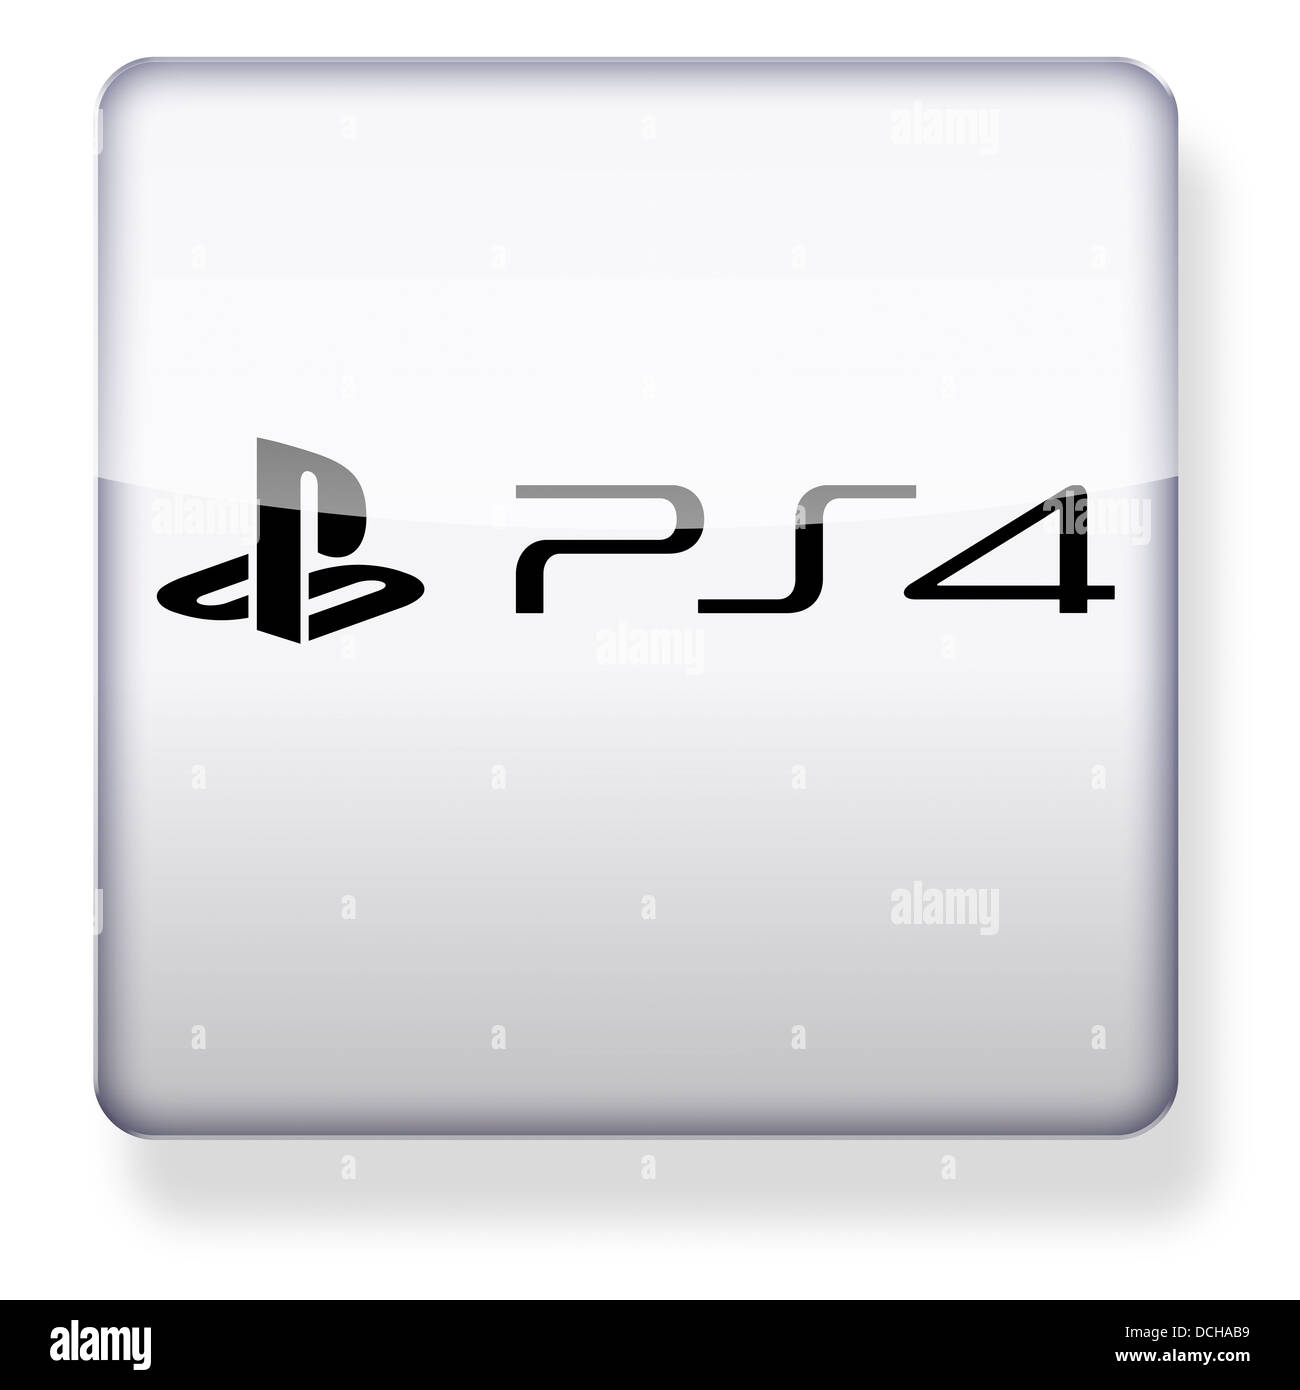 PlayStation 4 PS4-Logo als ein app-Symbol. Clipping-Pfad enthalten  Stockfotografie - Alamy